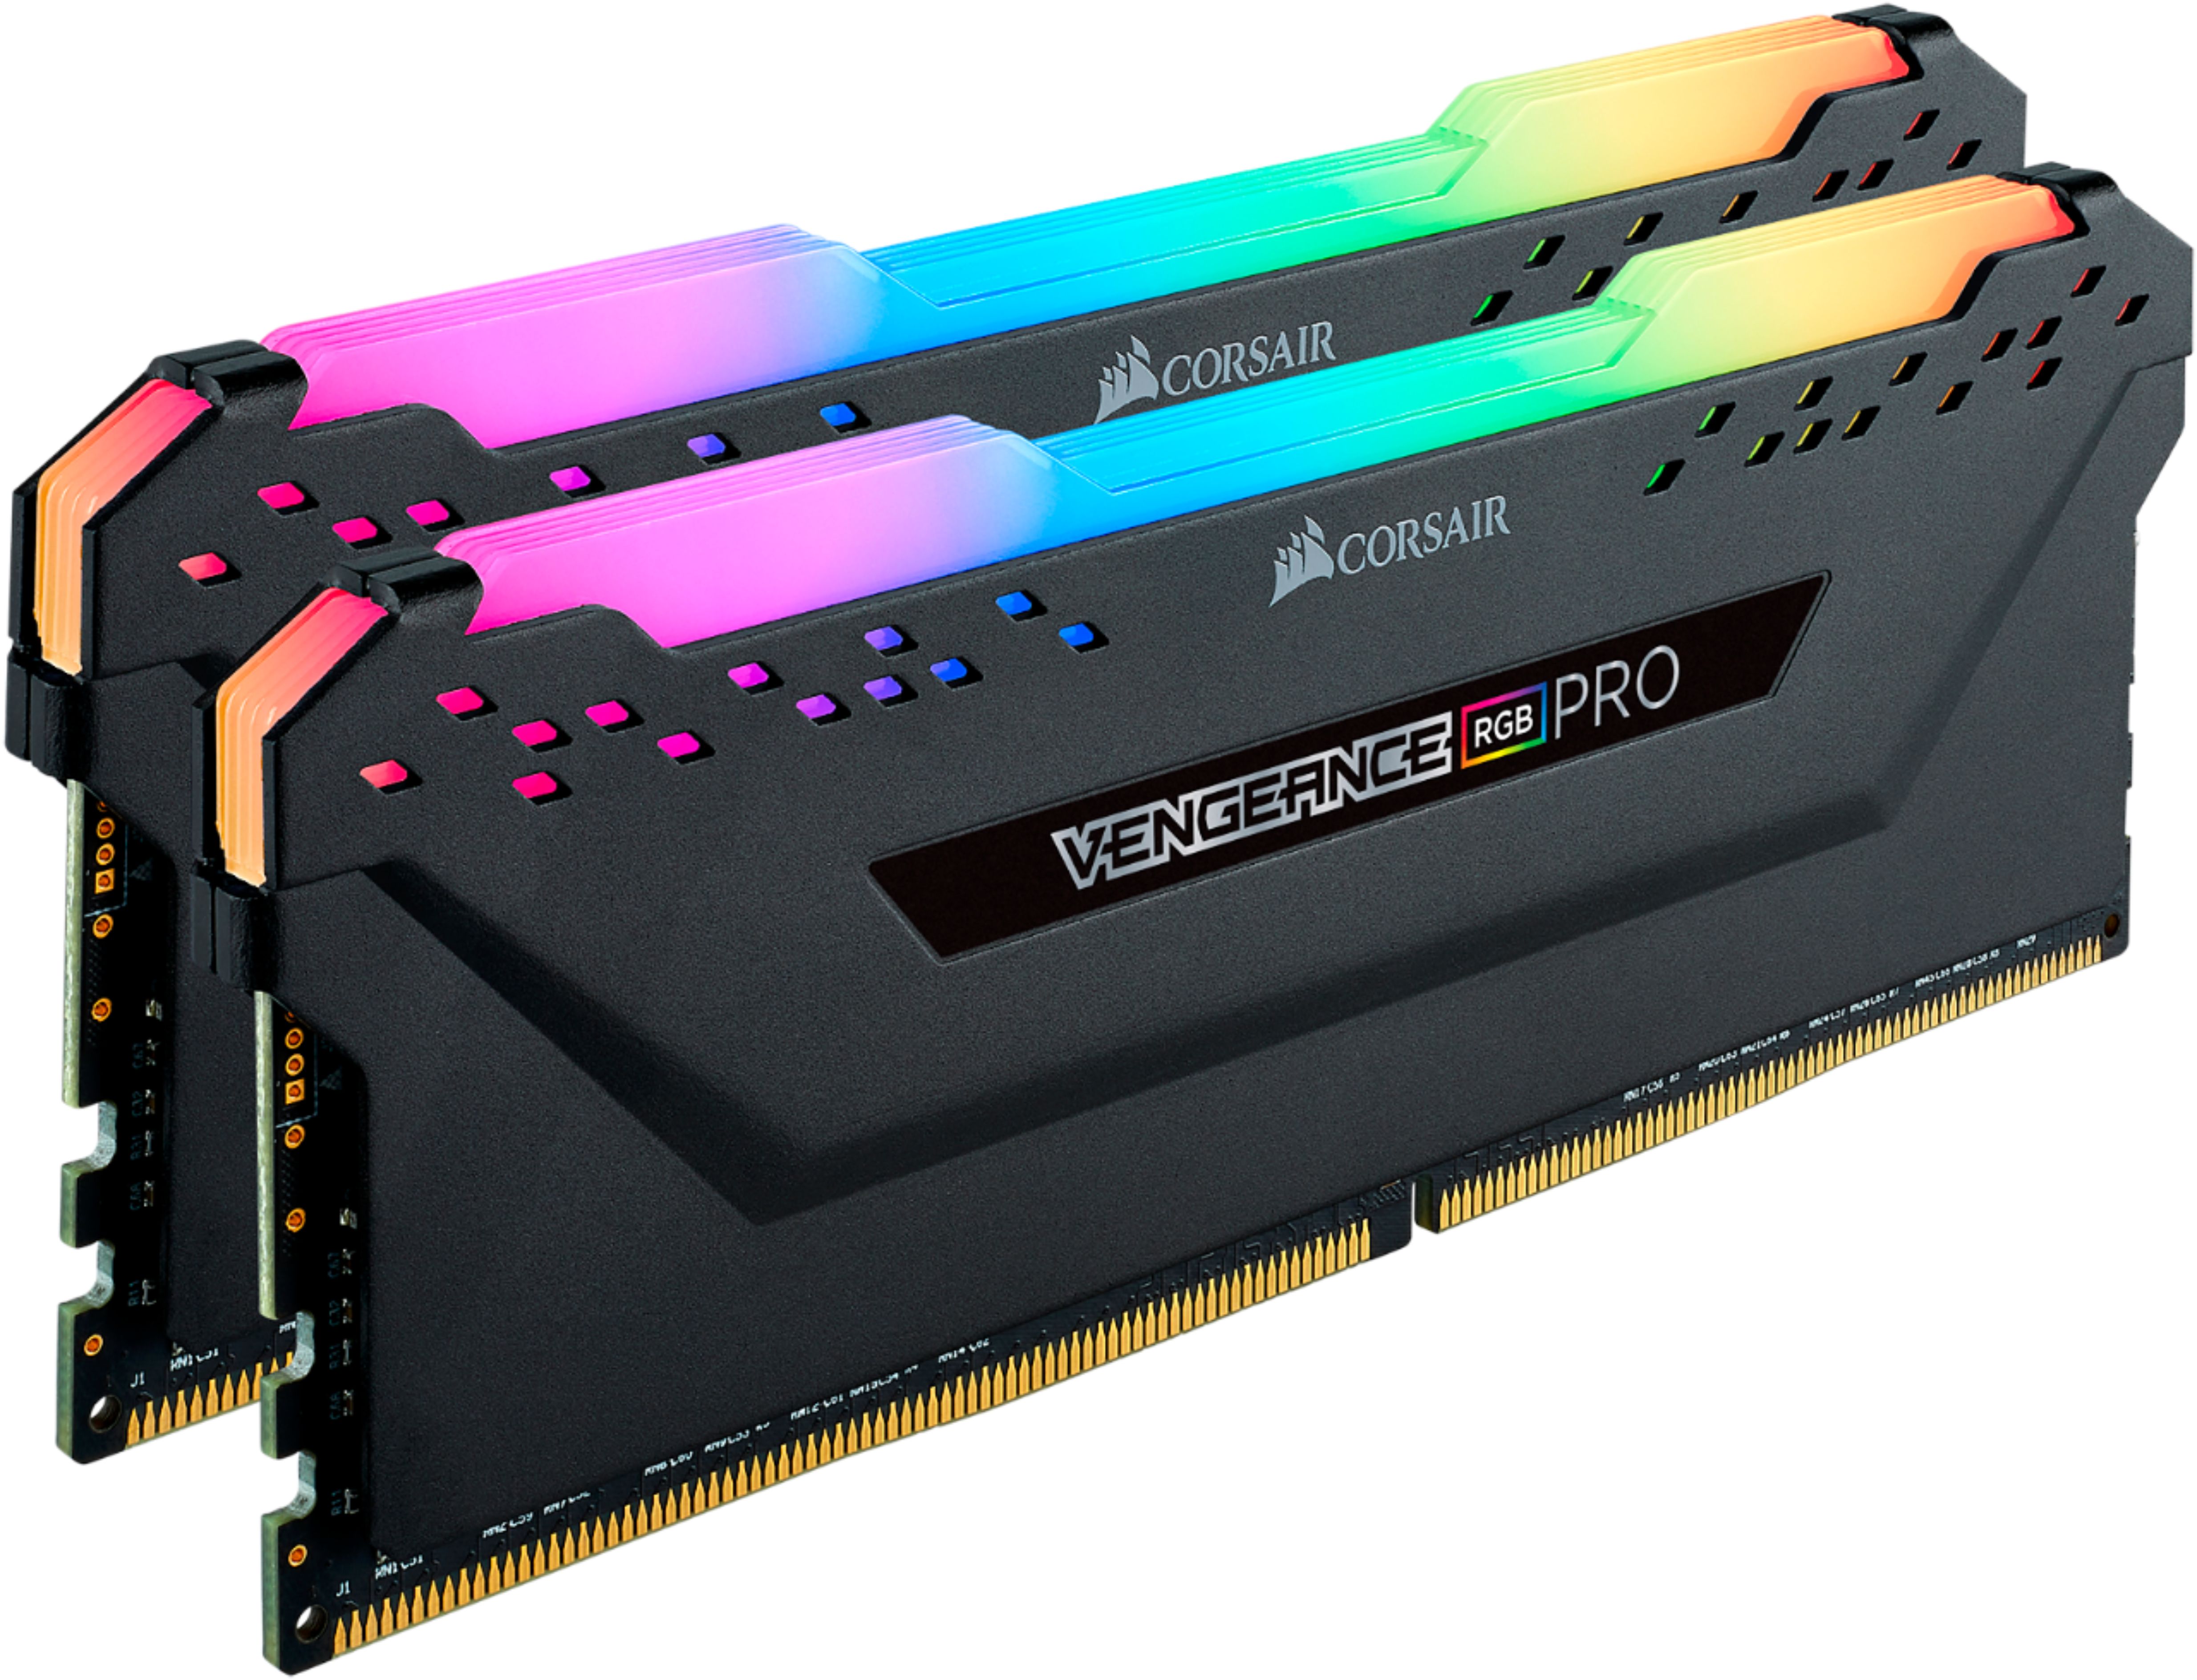 Corsair Value Select SO-DIMM DDR4 32 Go (2 x 16 Go) 2400 MHz CL16